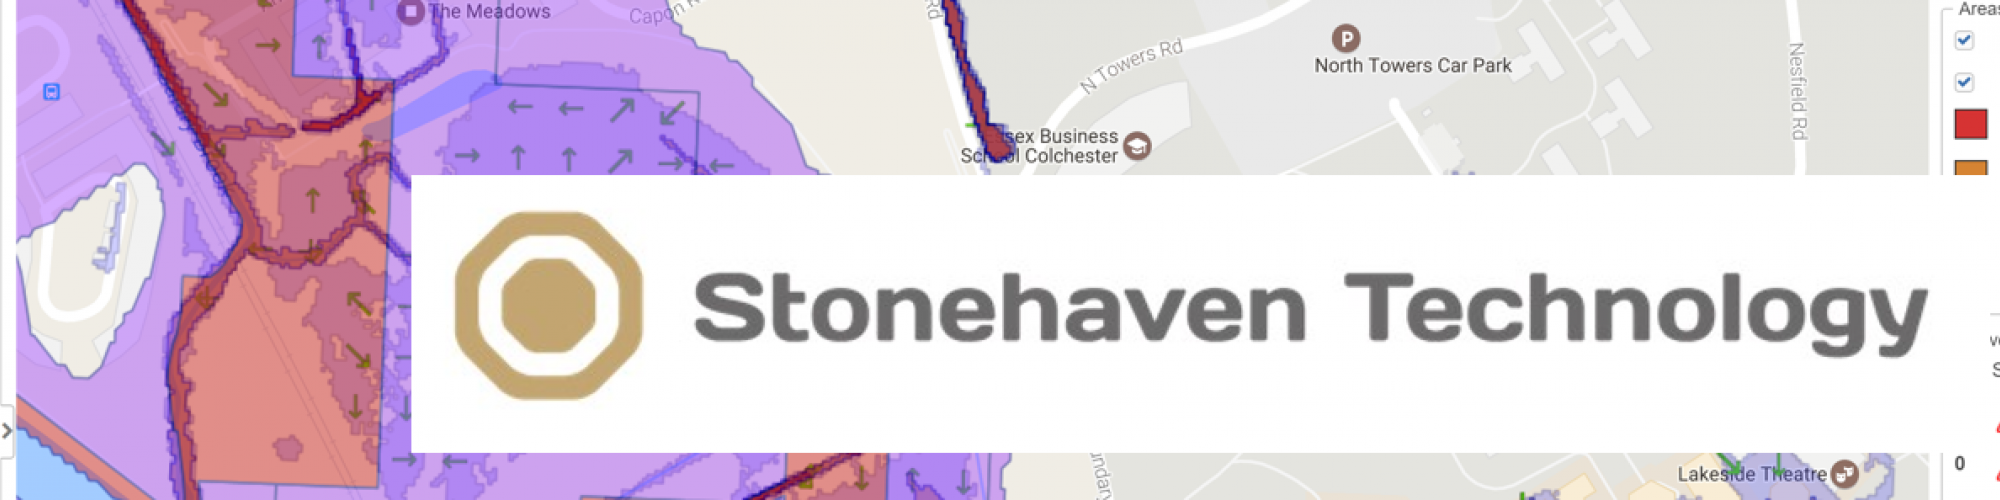 Stonehaven Technology